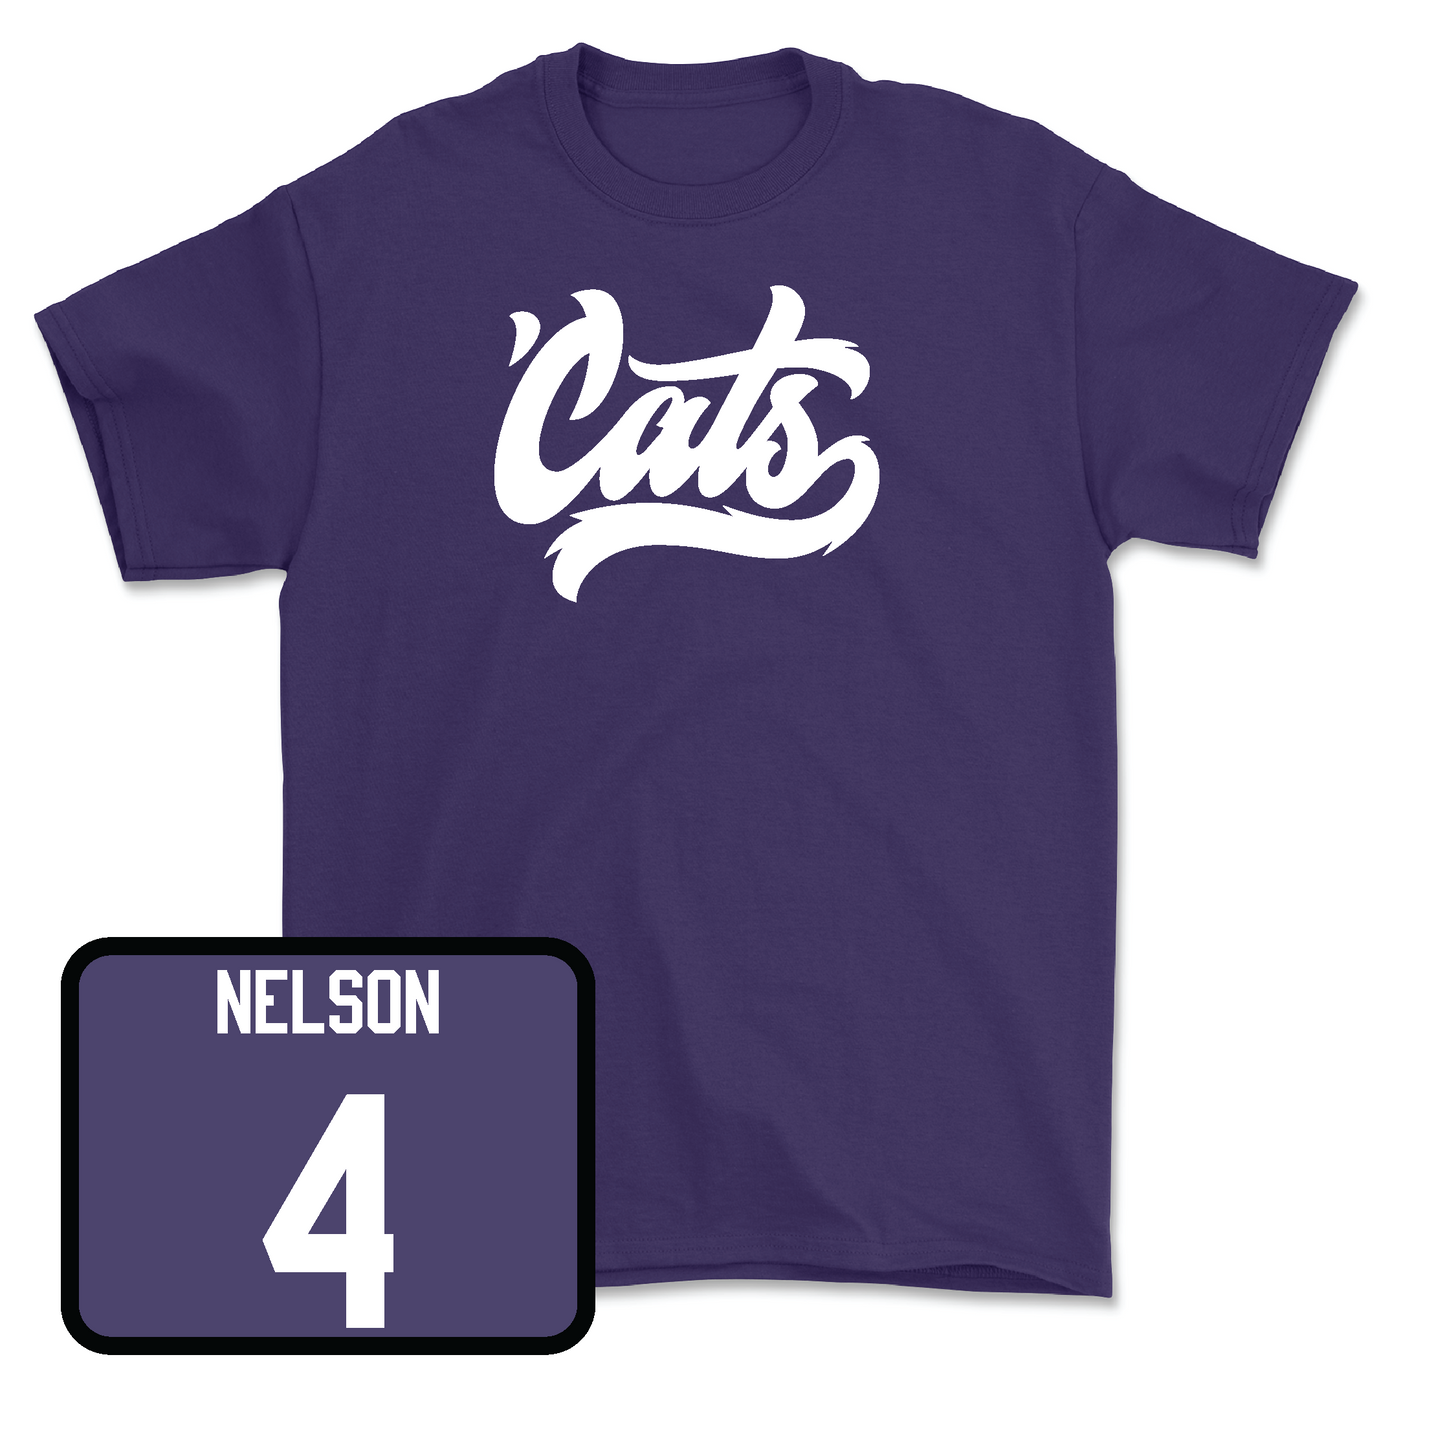 Purple Softball 'Cats Tee